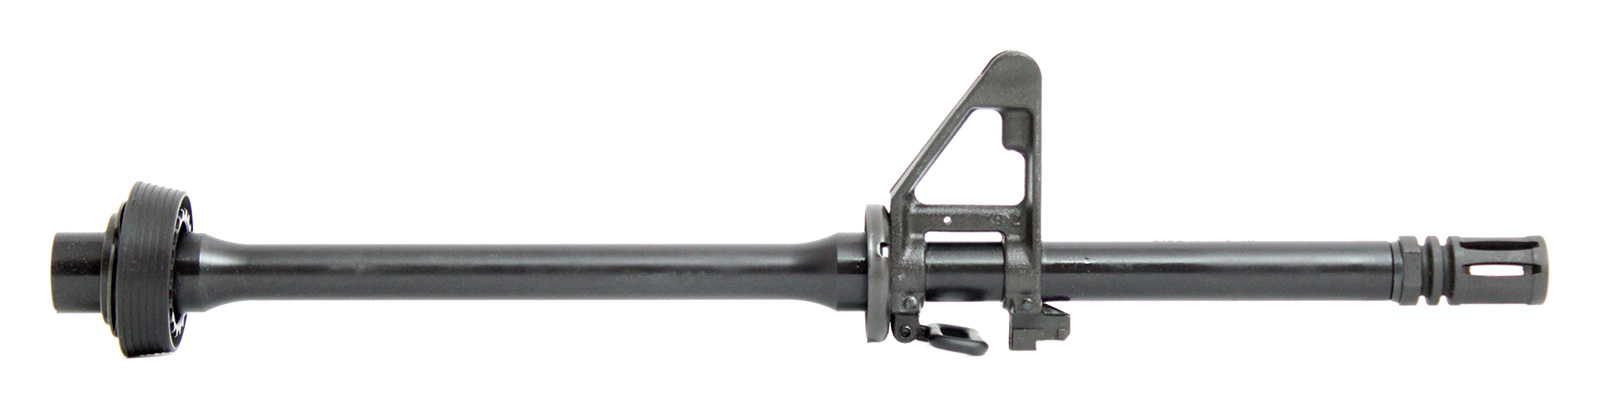 ar-15-m4-barrel-with-sight-profile